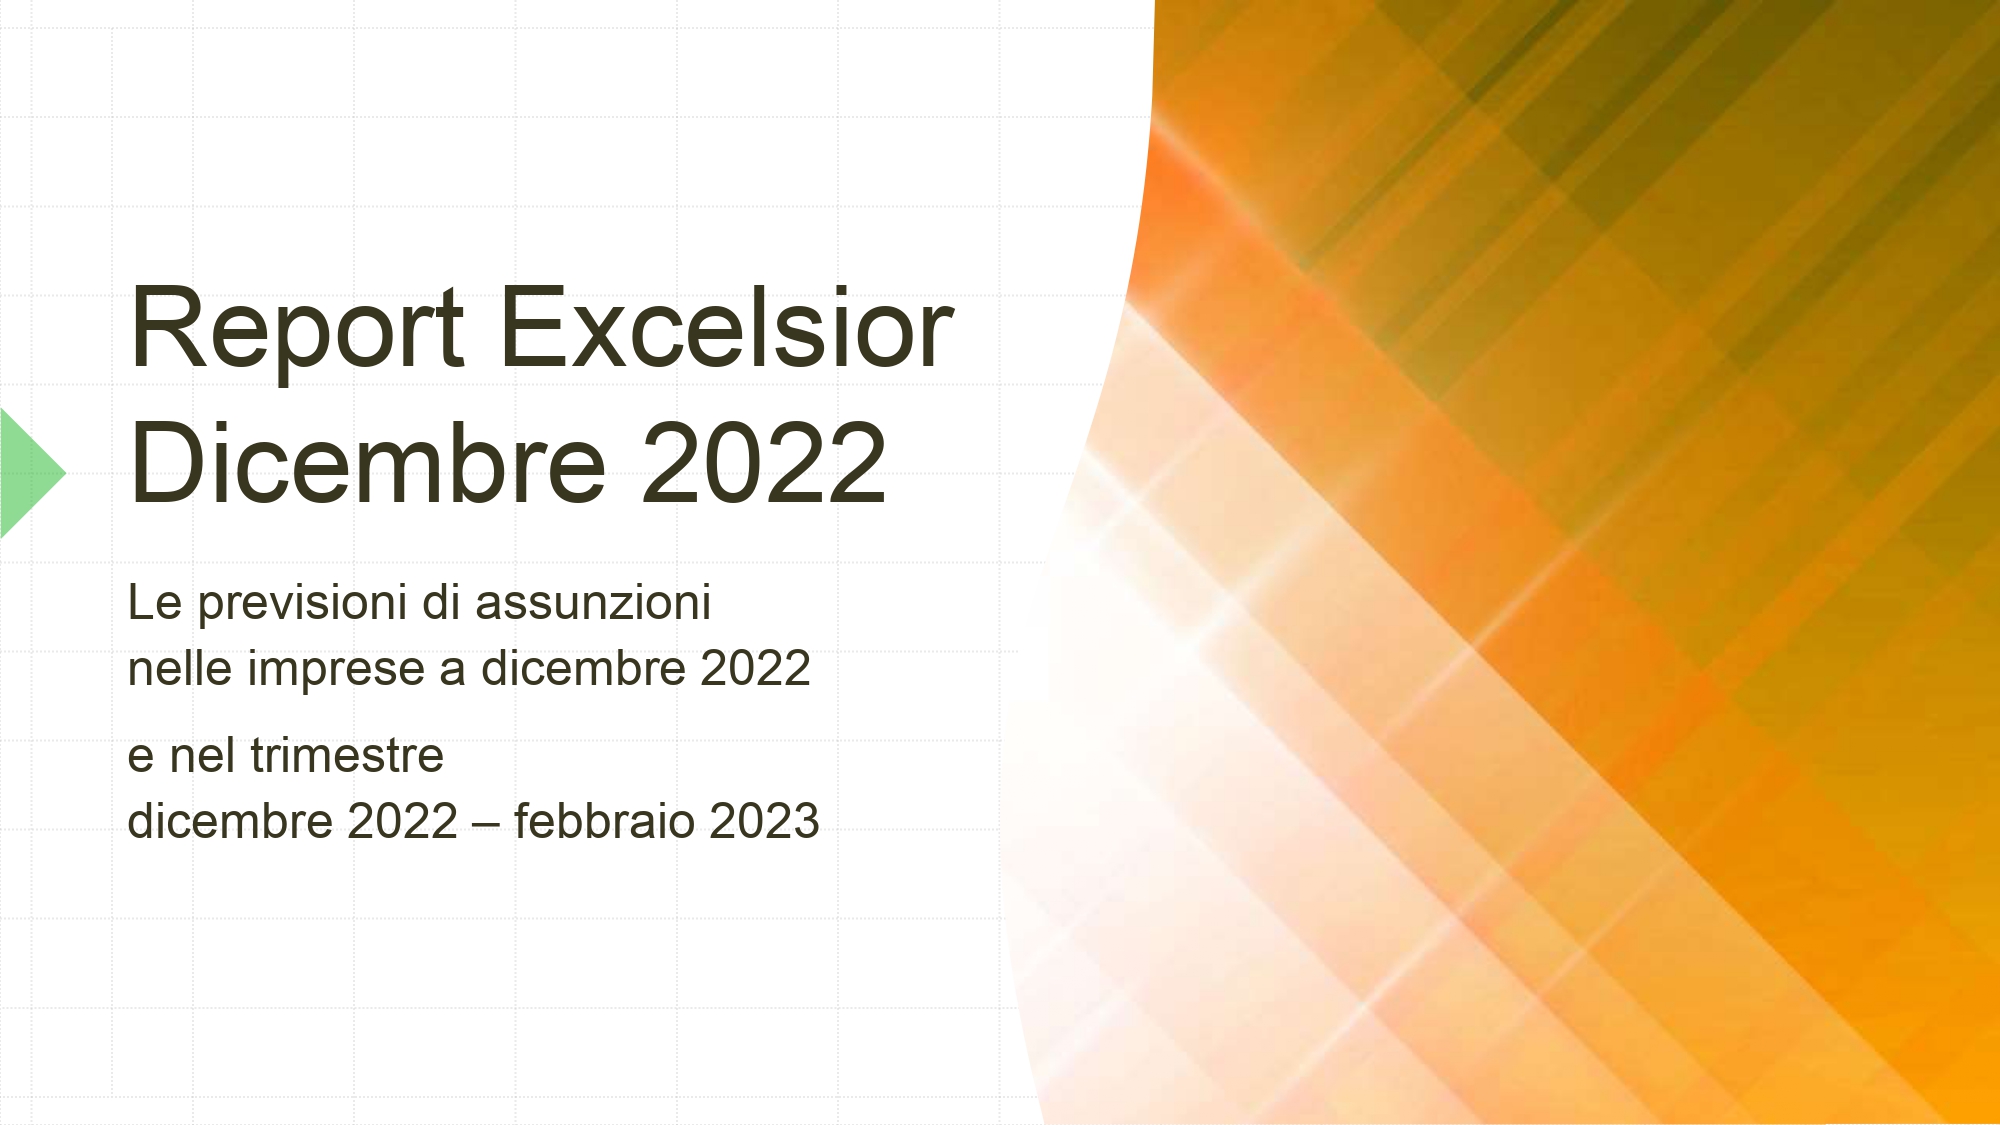 Report Excelsior Dicembre 2022 in pdf page 0001